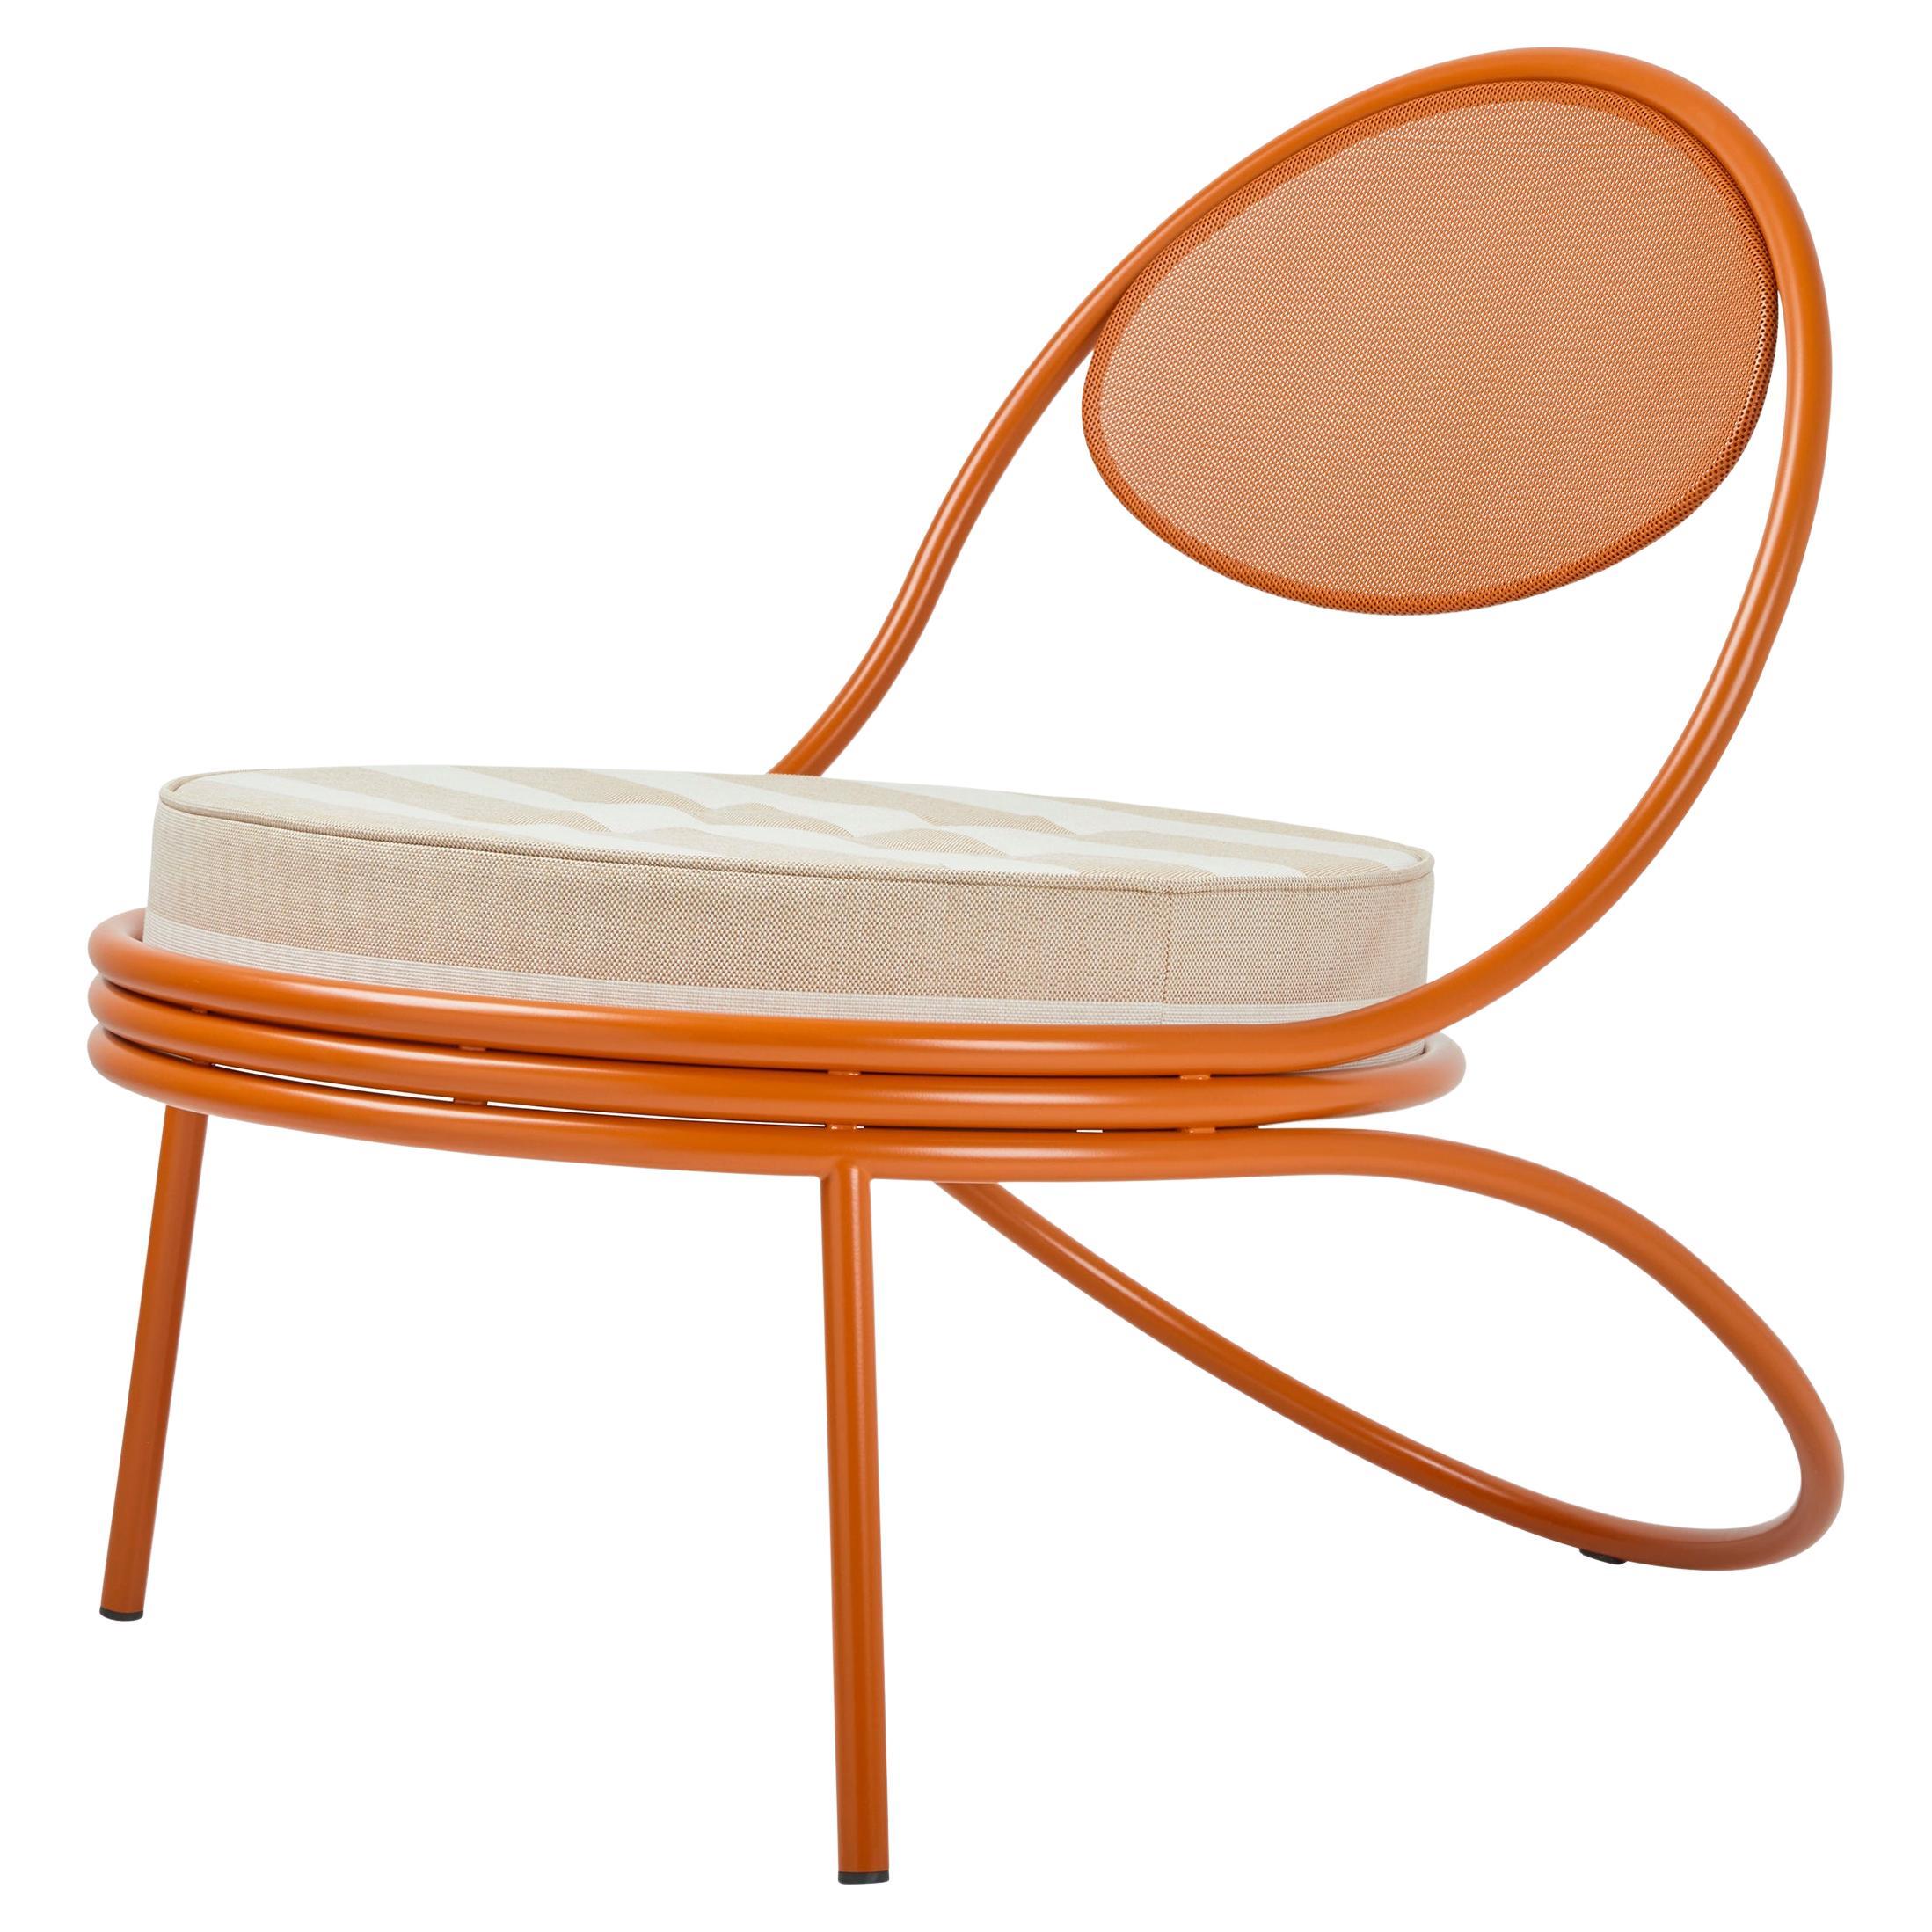 'Copacabana' Indoor Outdoor Lounge Chair by Mathieu Matégot in Leslie Fabric